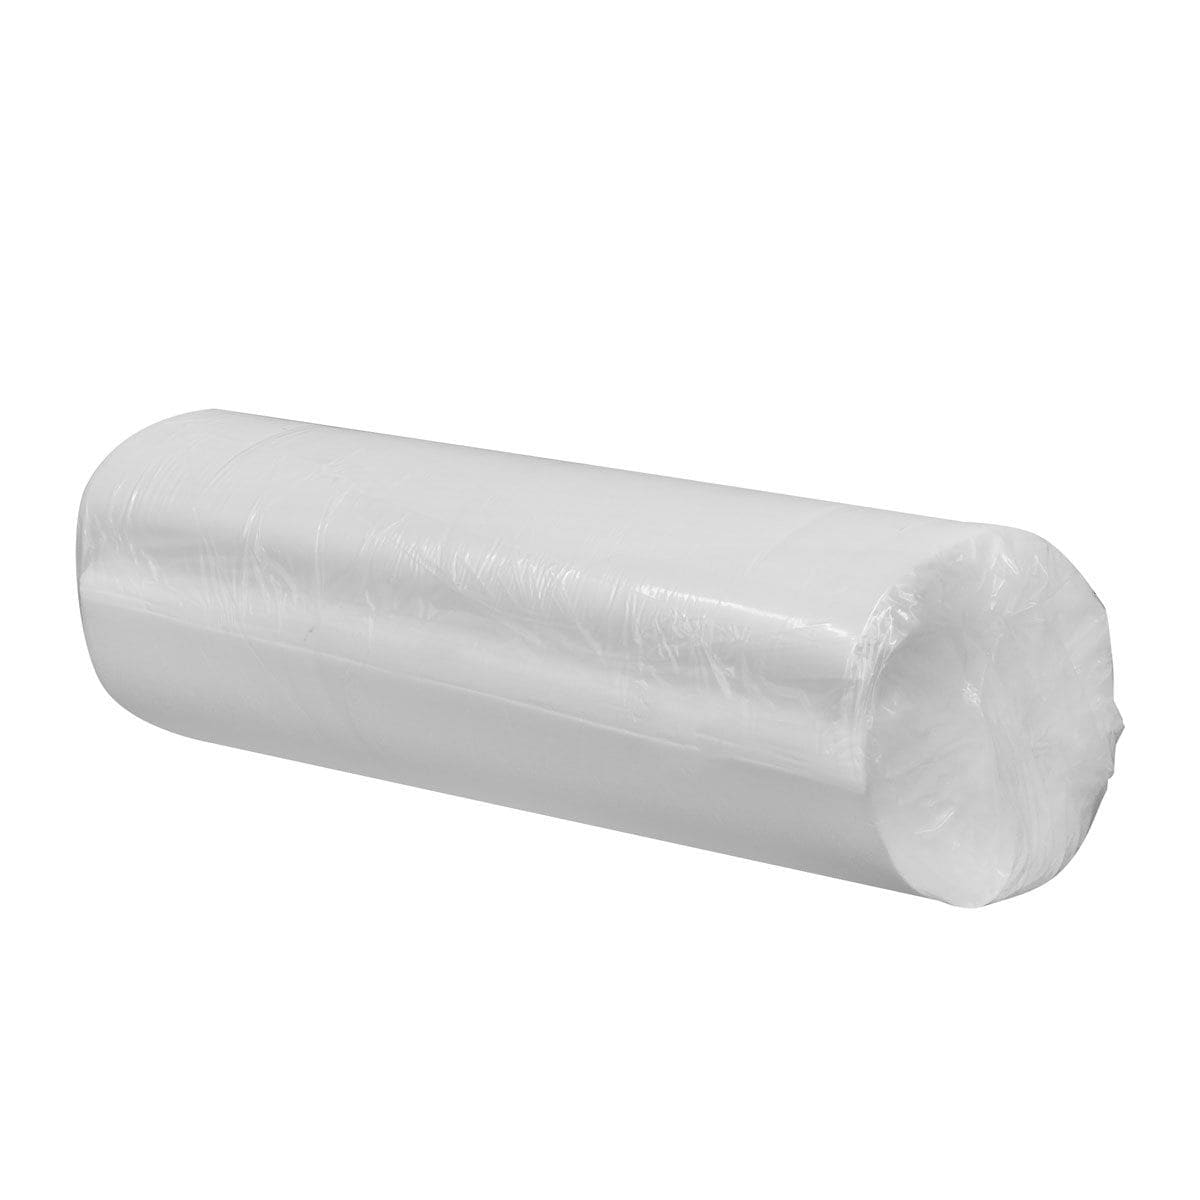 Foam Only - 30cm Thick Foam Core Filler - Very Soft